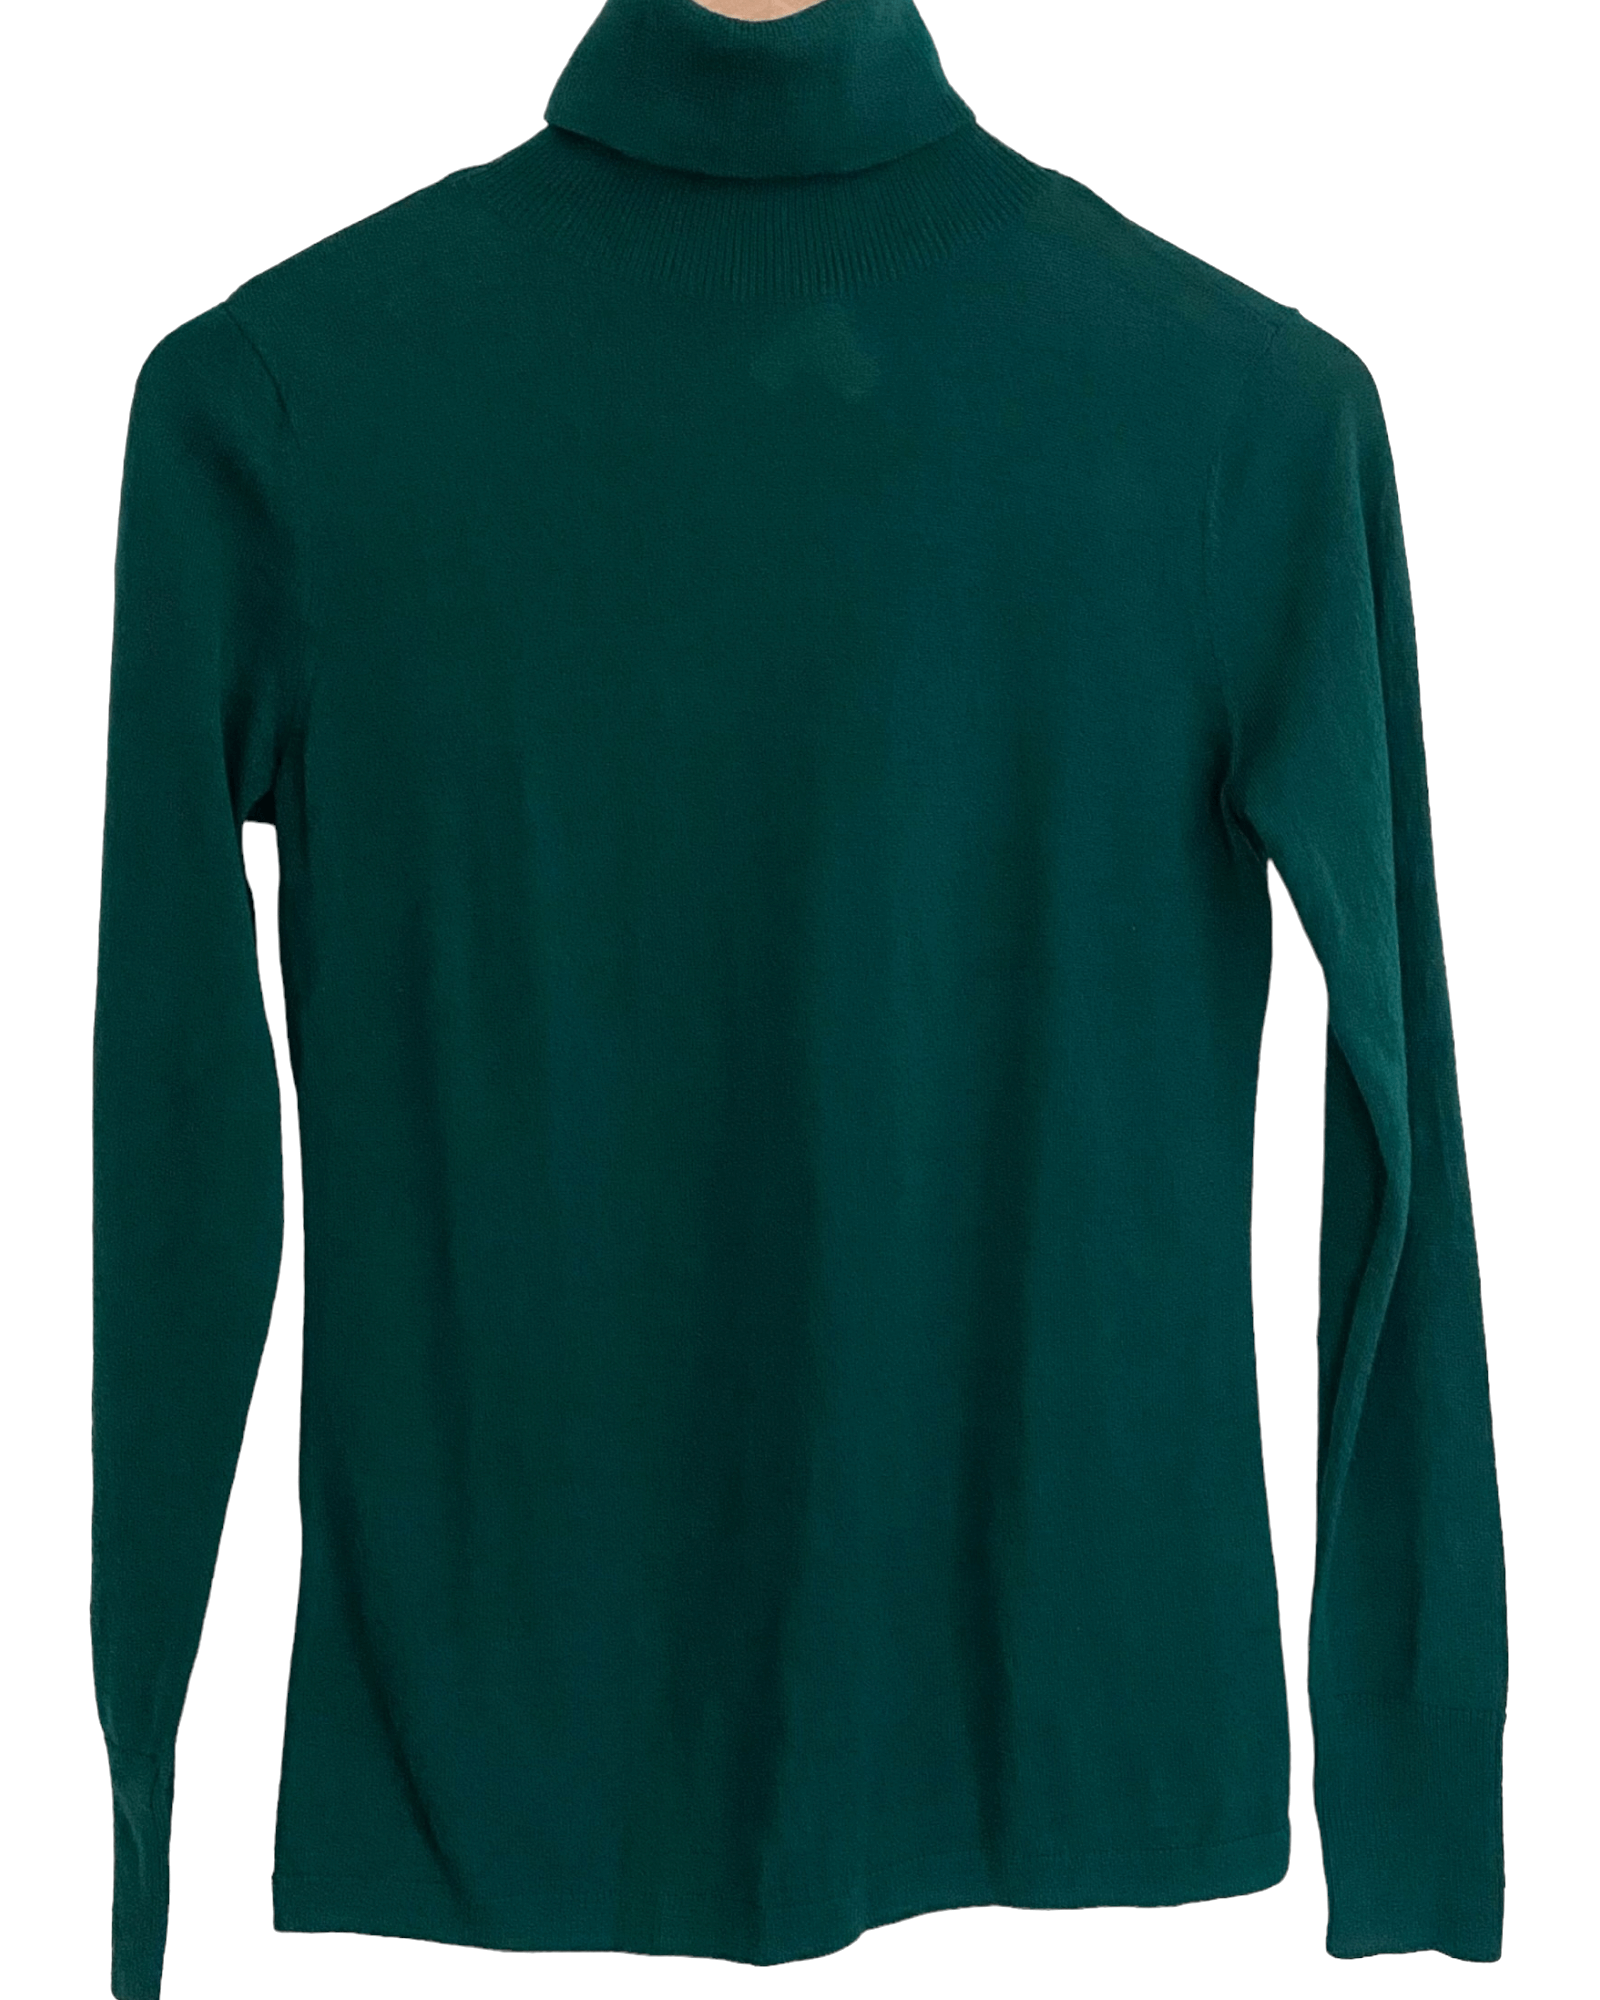 Dark Winter 1901 everglade green wool turtleneck sweater